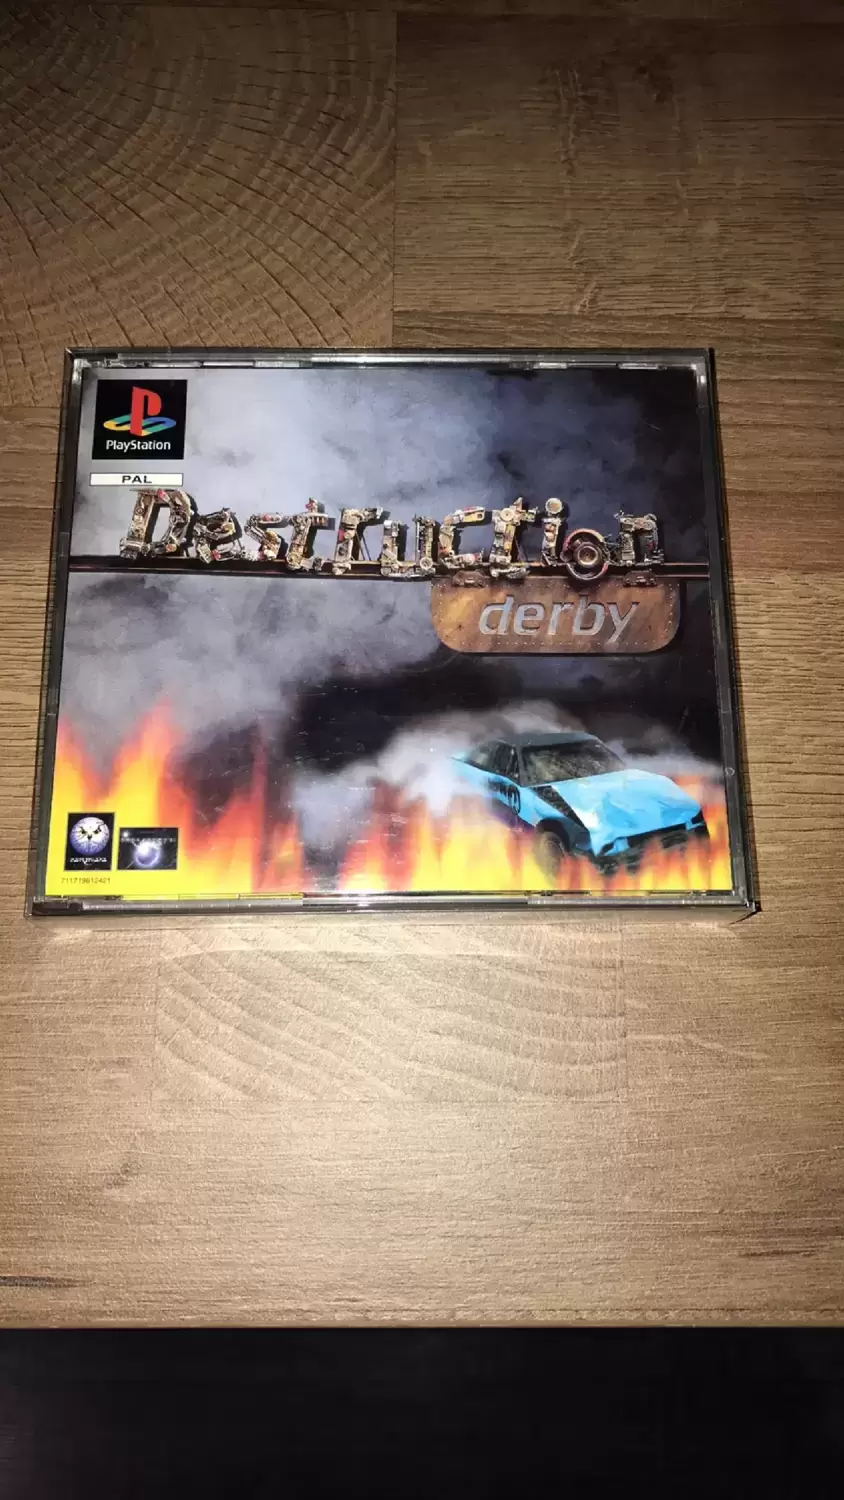 Playstation games - Destruction Derby